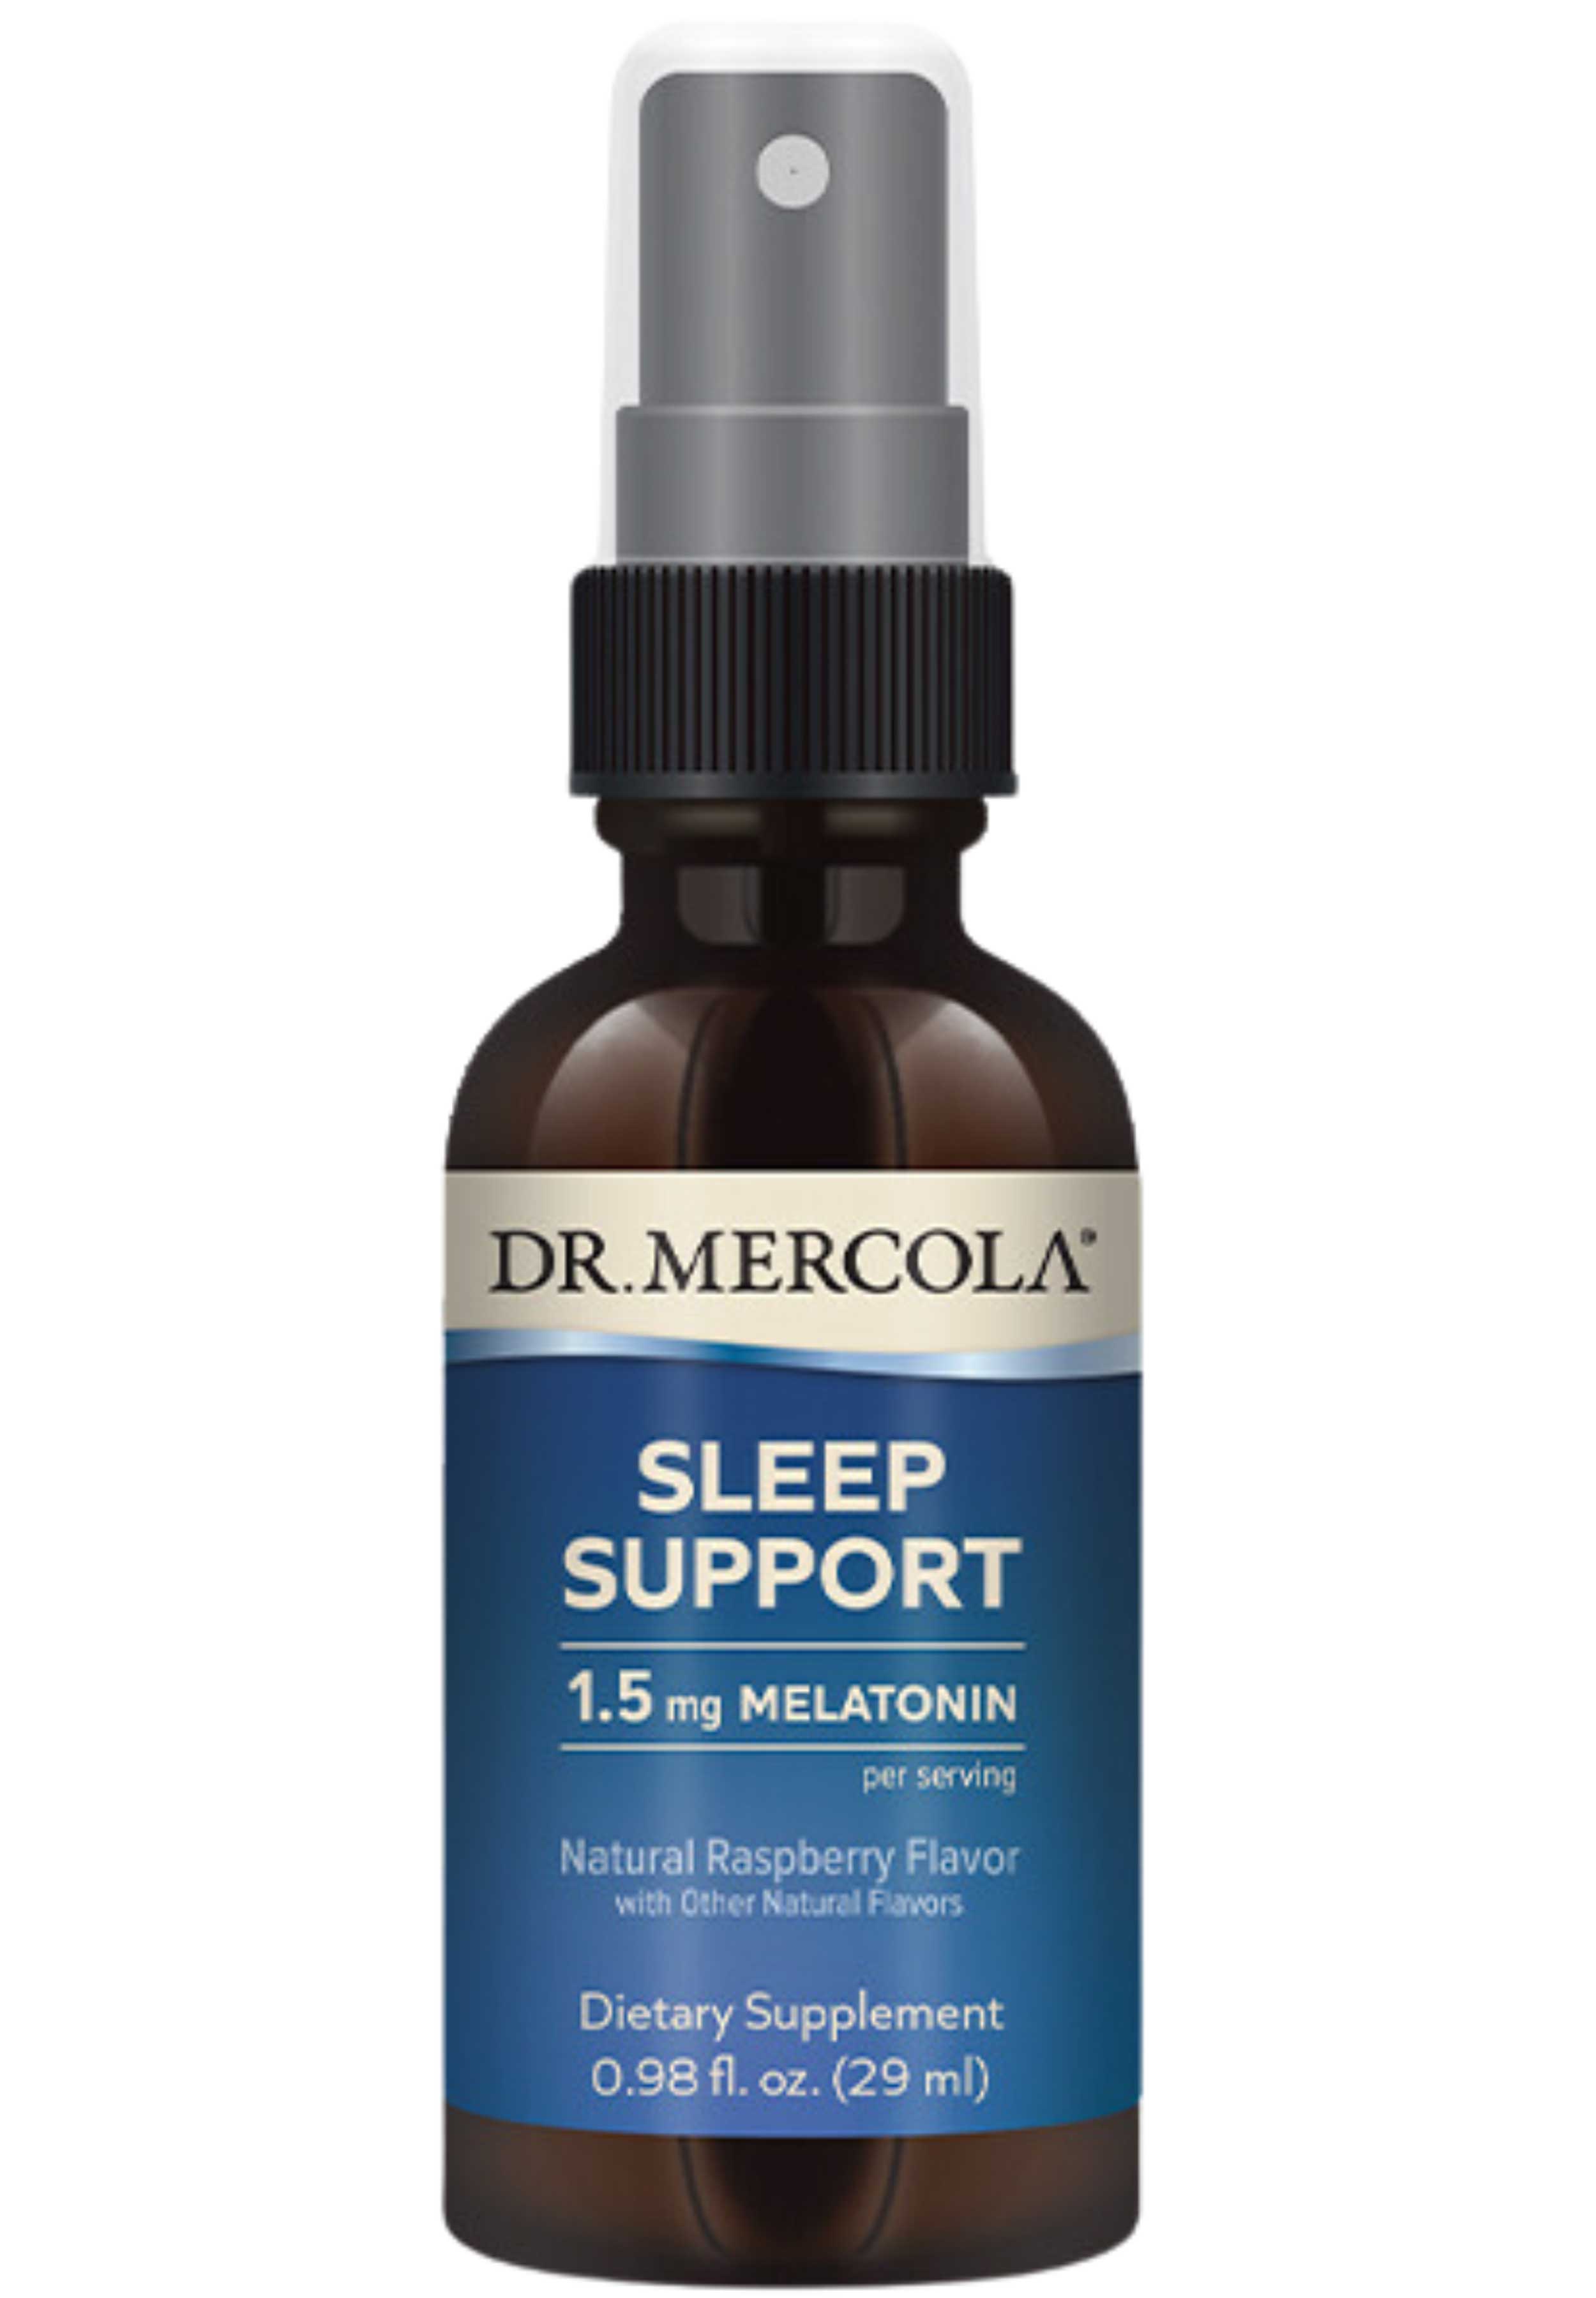 Dr. Mercola Sleep Support with Melatonin Spray (Formerly Melatonin Sleep Support)